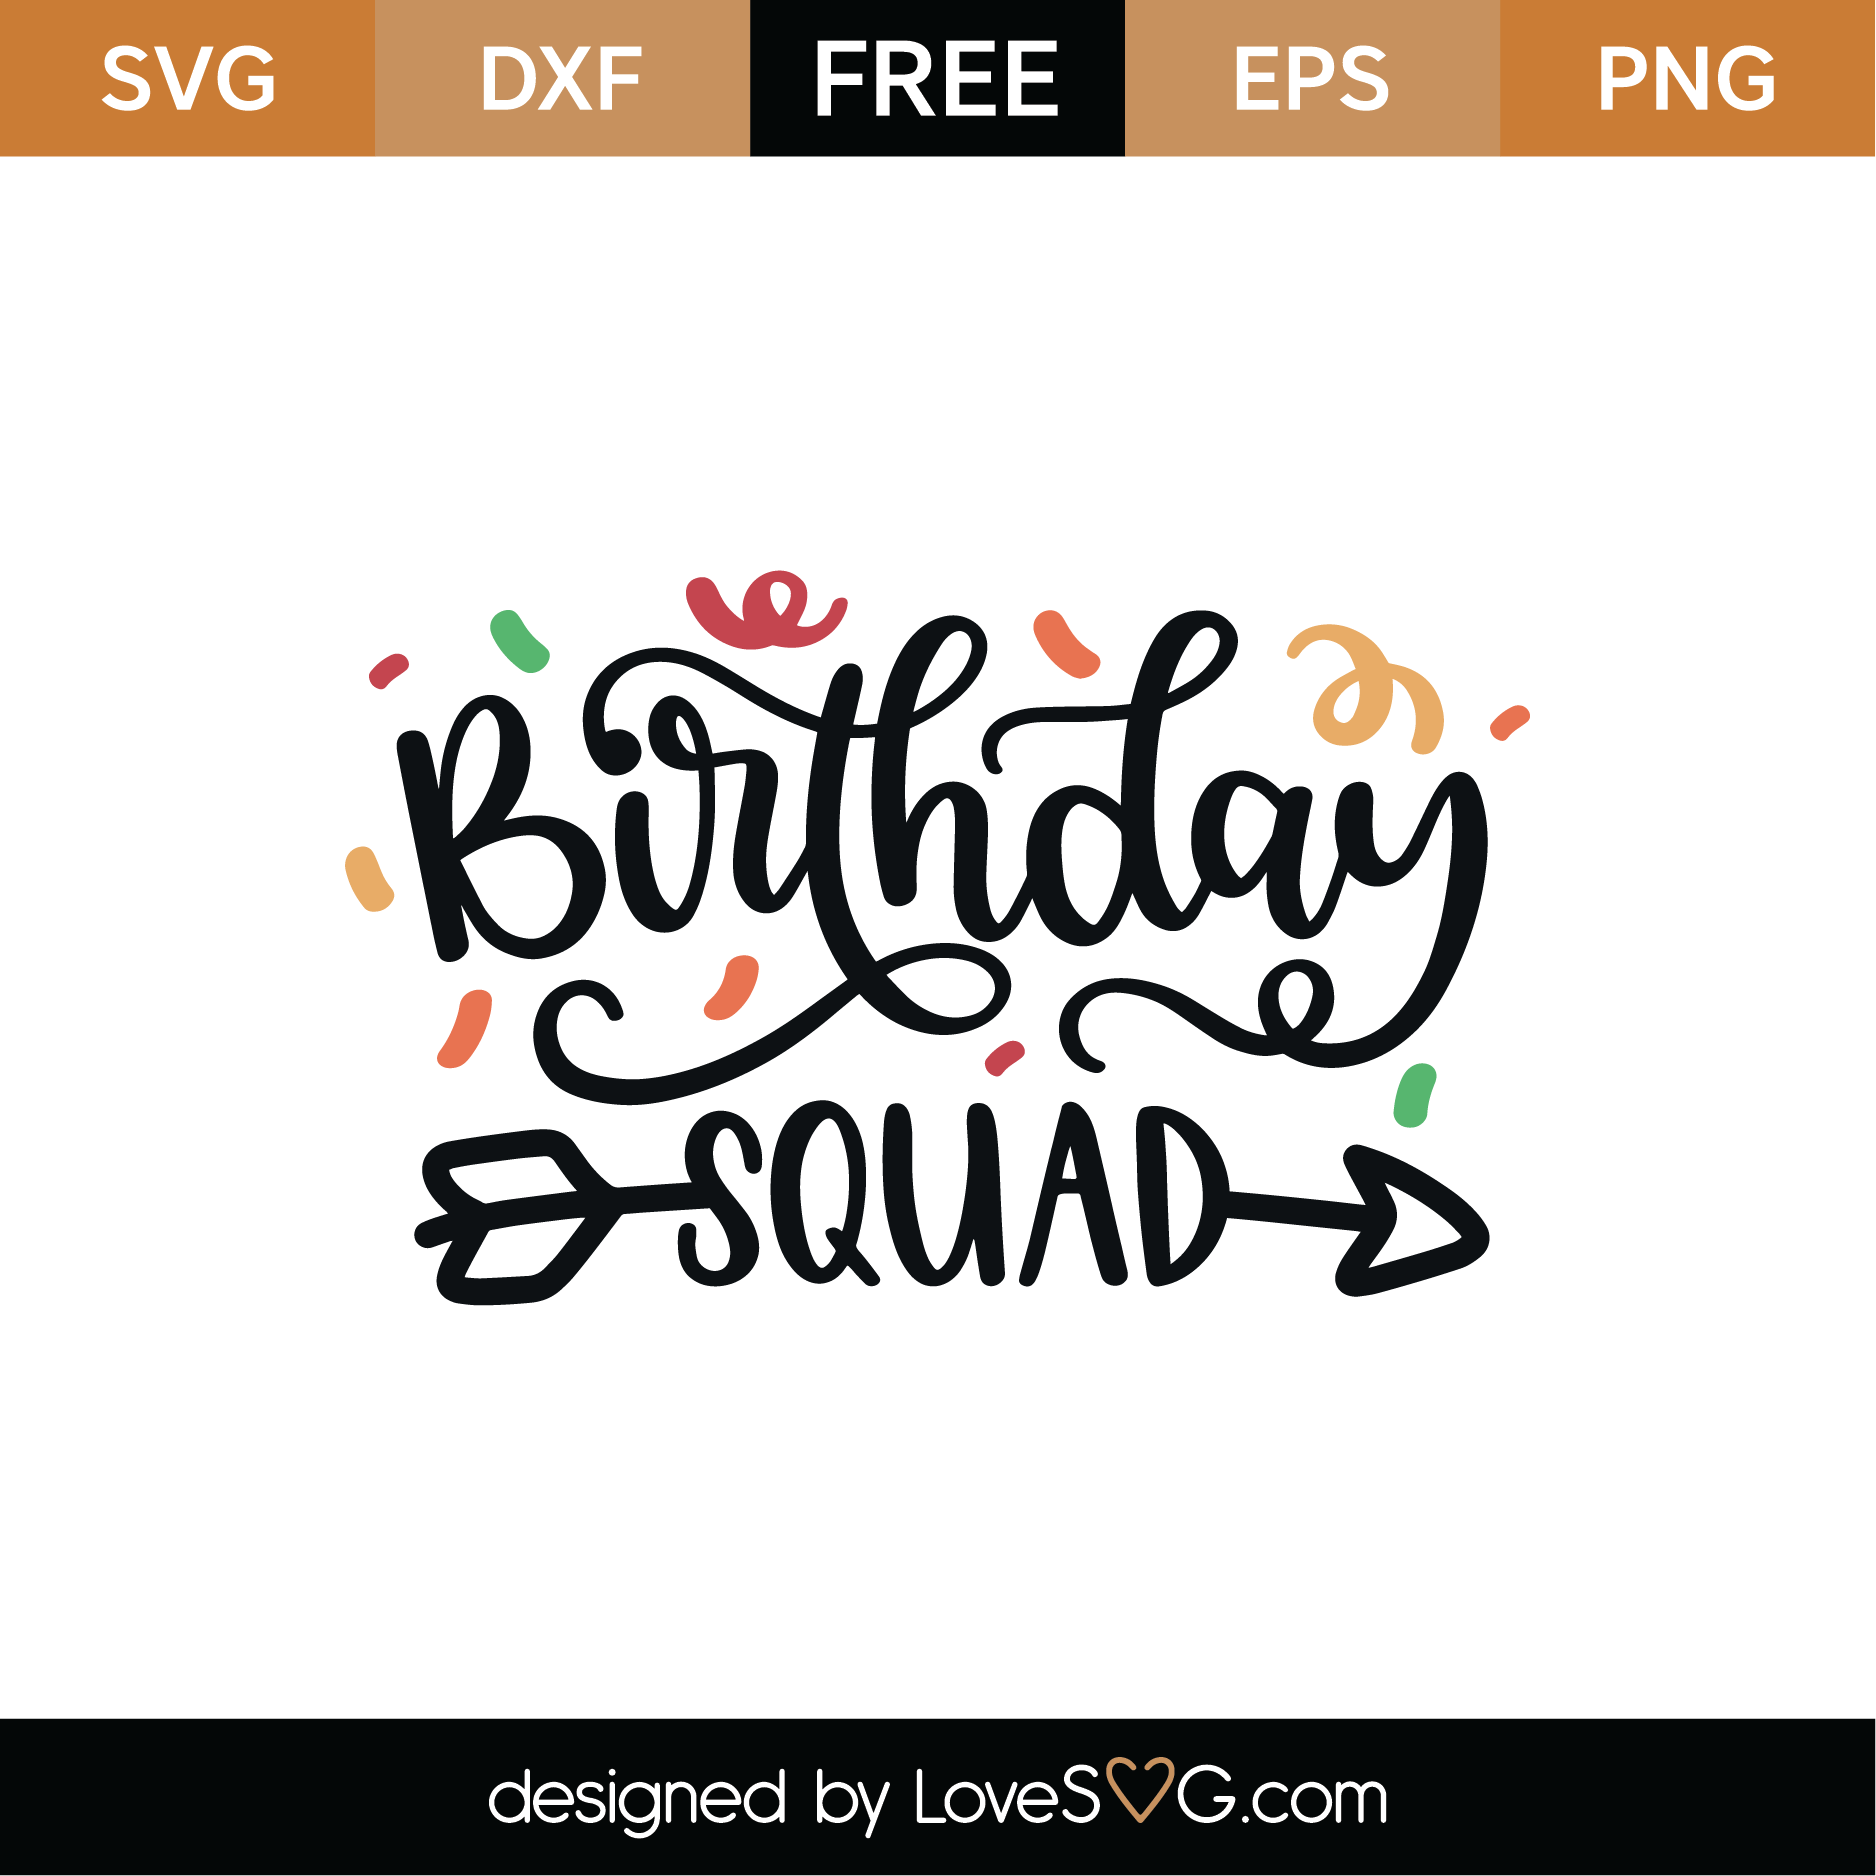 Download Free Birthday Squad SVG Cut File | Lovesvg.com